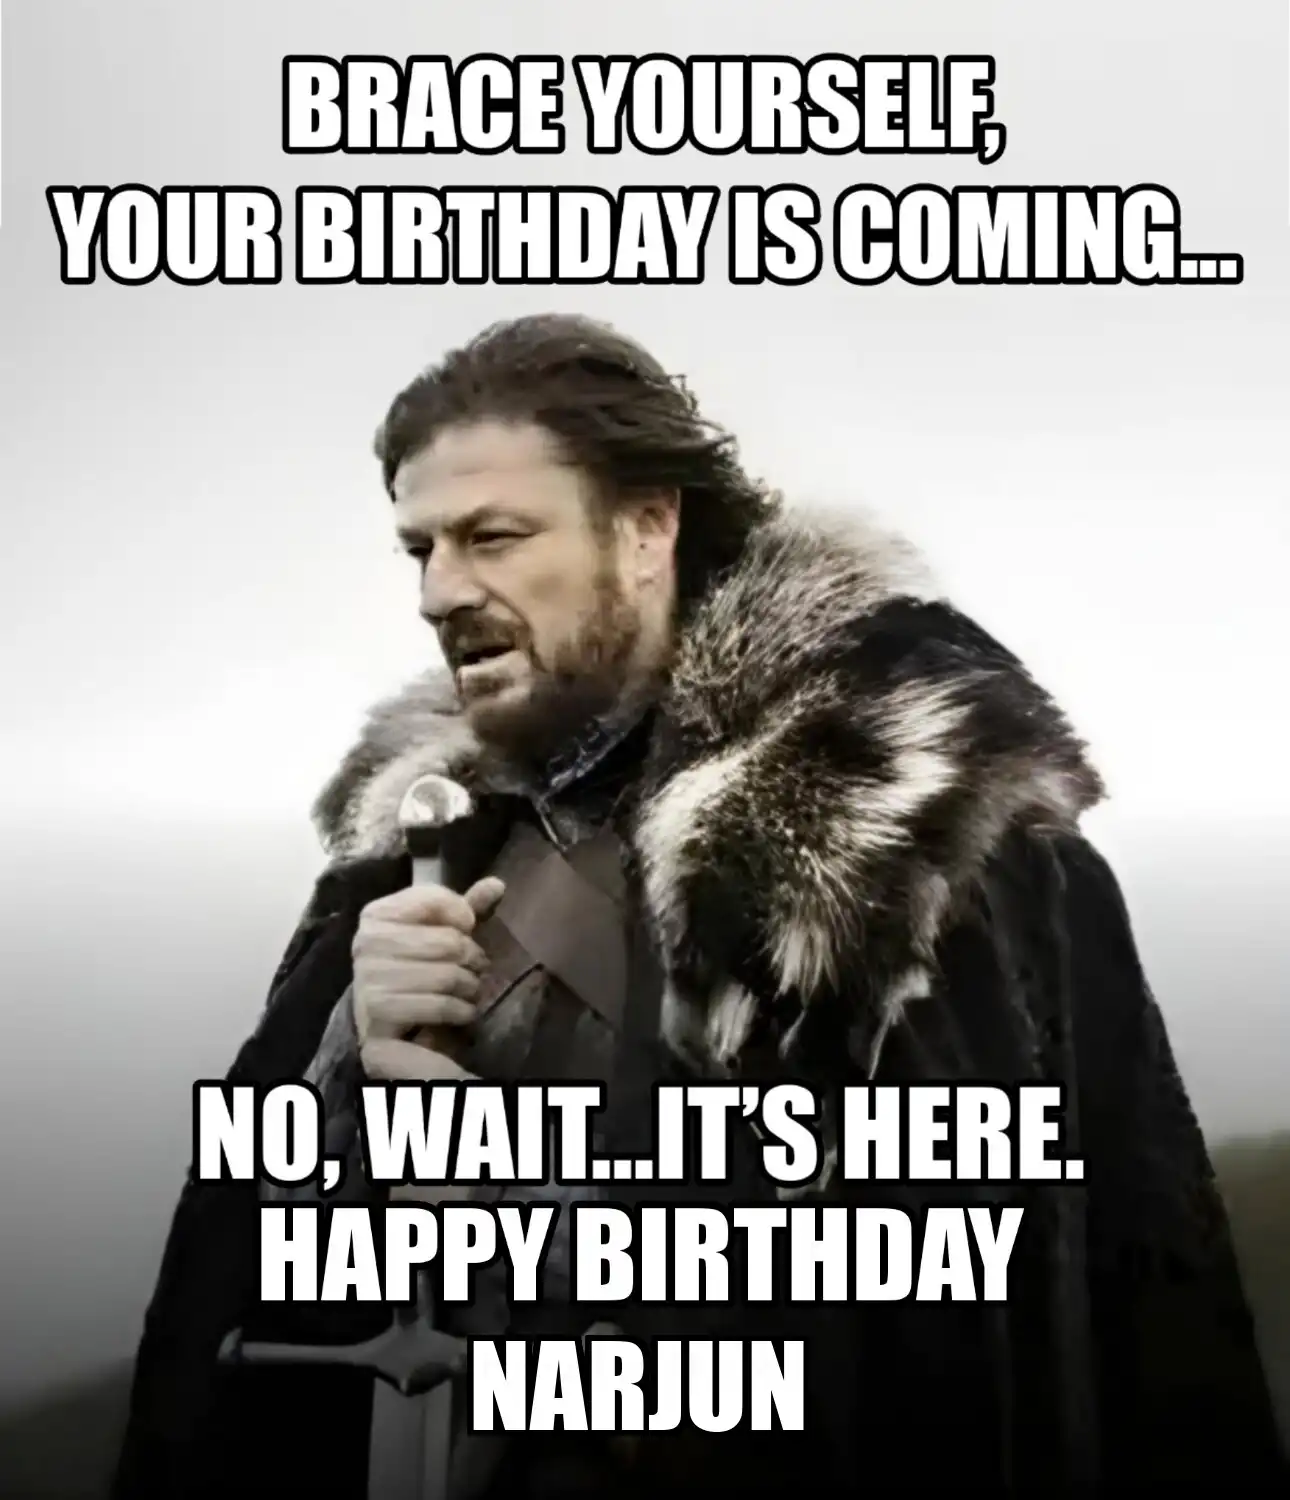 Happy Birthday Narjun Brace Yourself Your Birthday Is Coming Meme